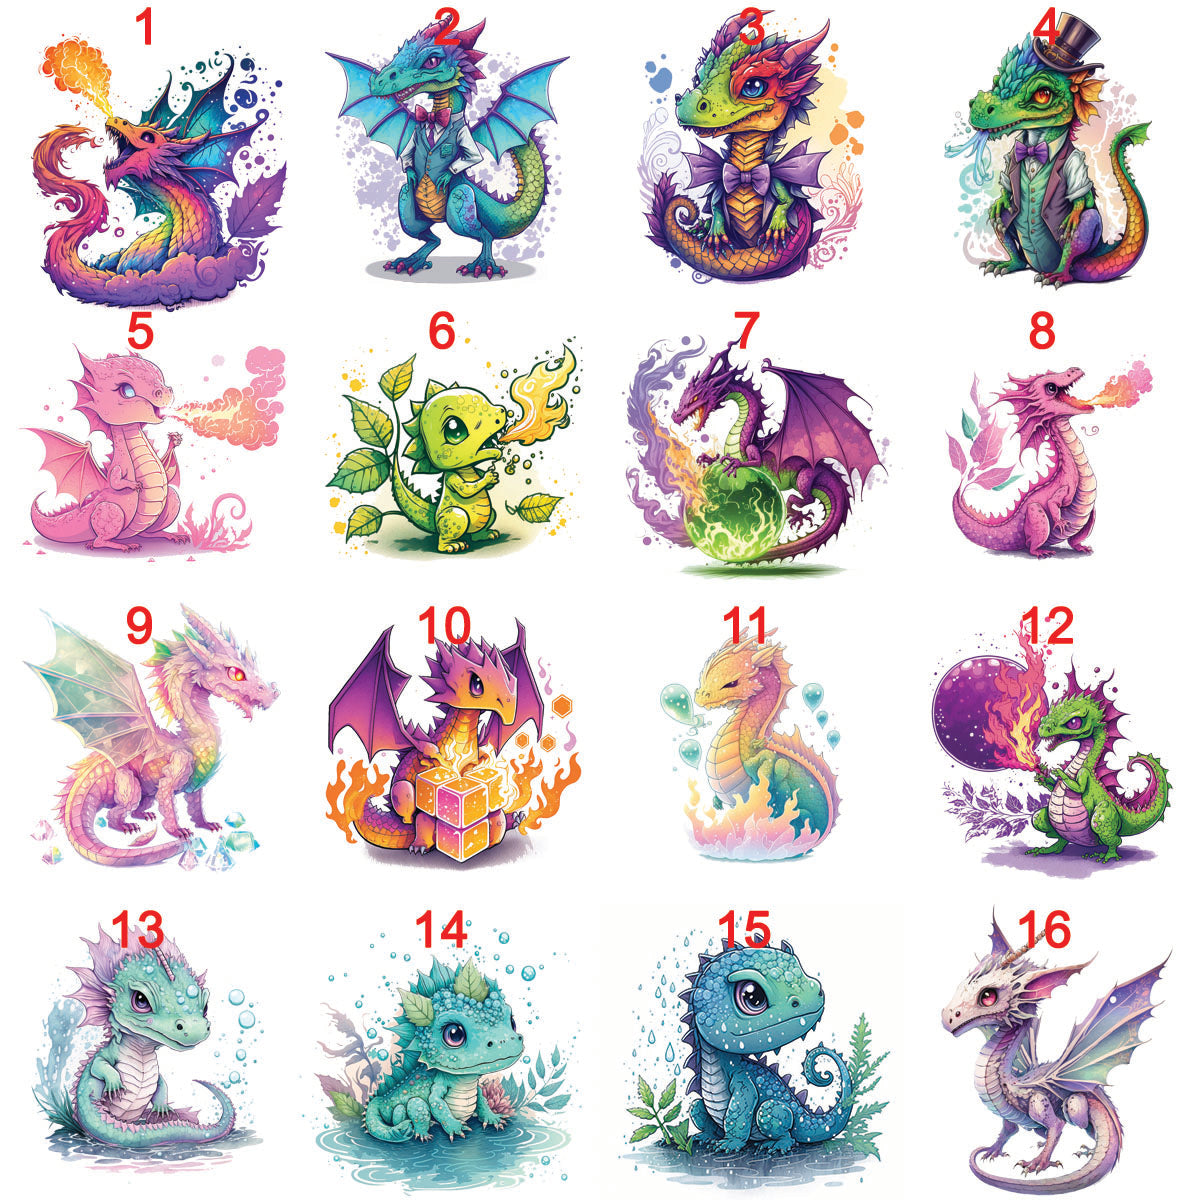 STICKERS 3- My Art Stickers, dragons, colorful, bunnies, faries, fairy, faery, magic, mythical, bear, giraffe, wearwolf, lizard, dinosaur,